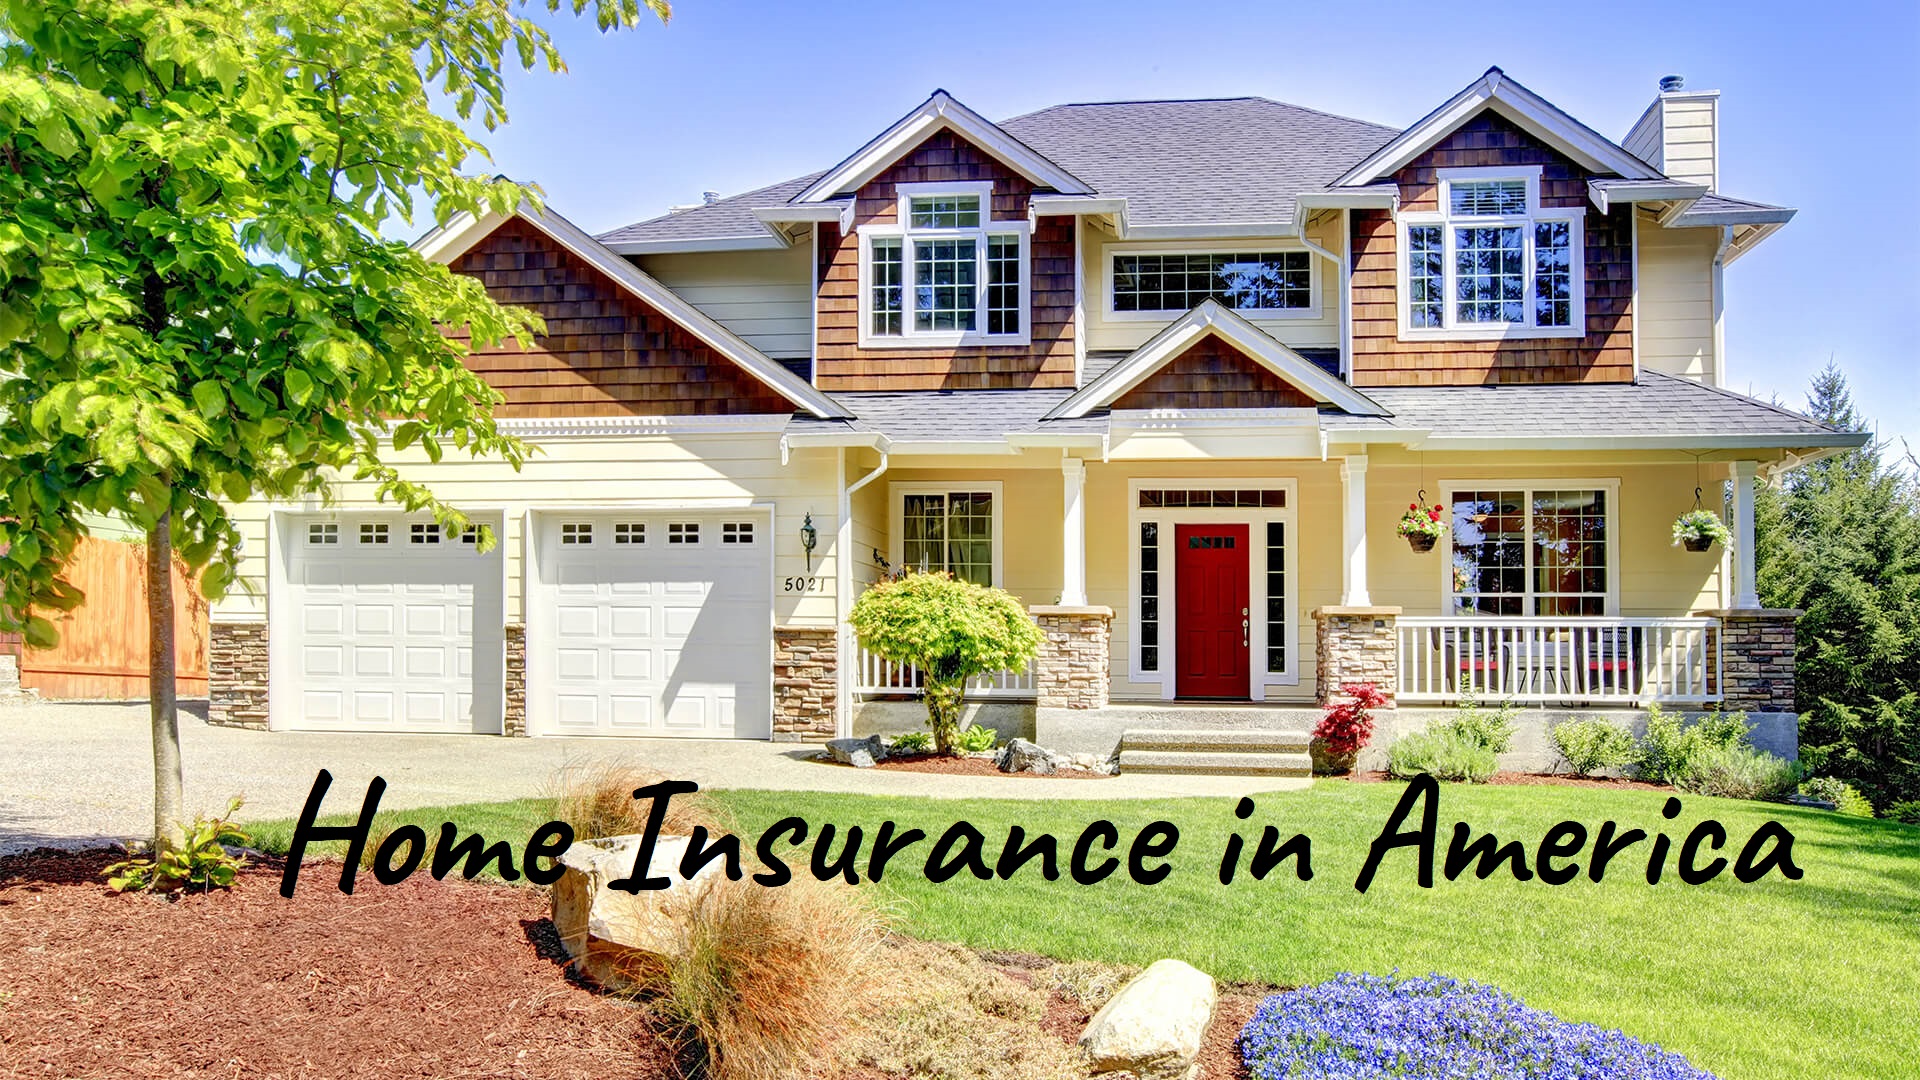 Home Insurance in America